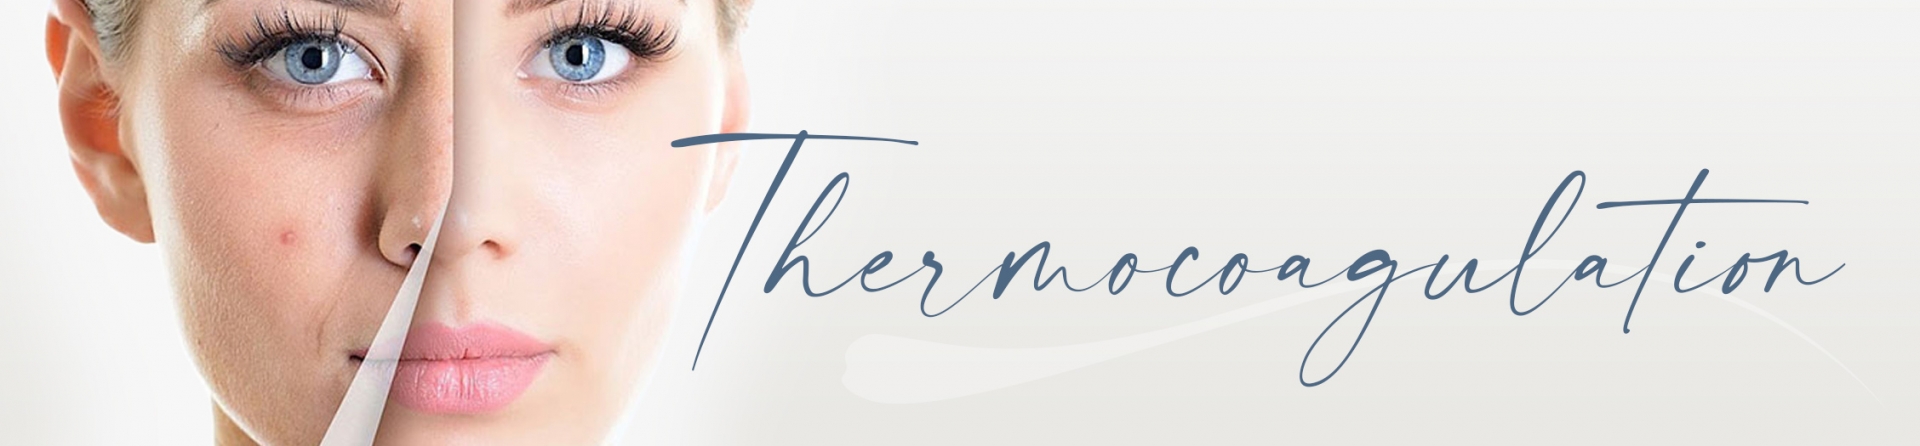 Thermocoagulation